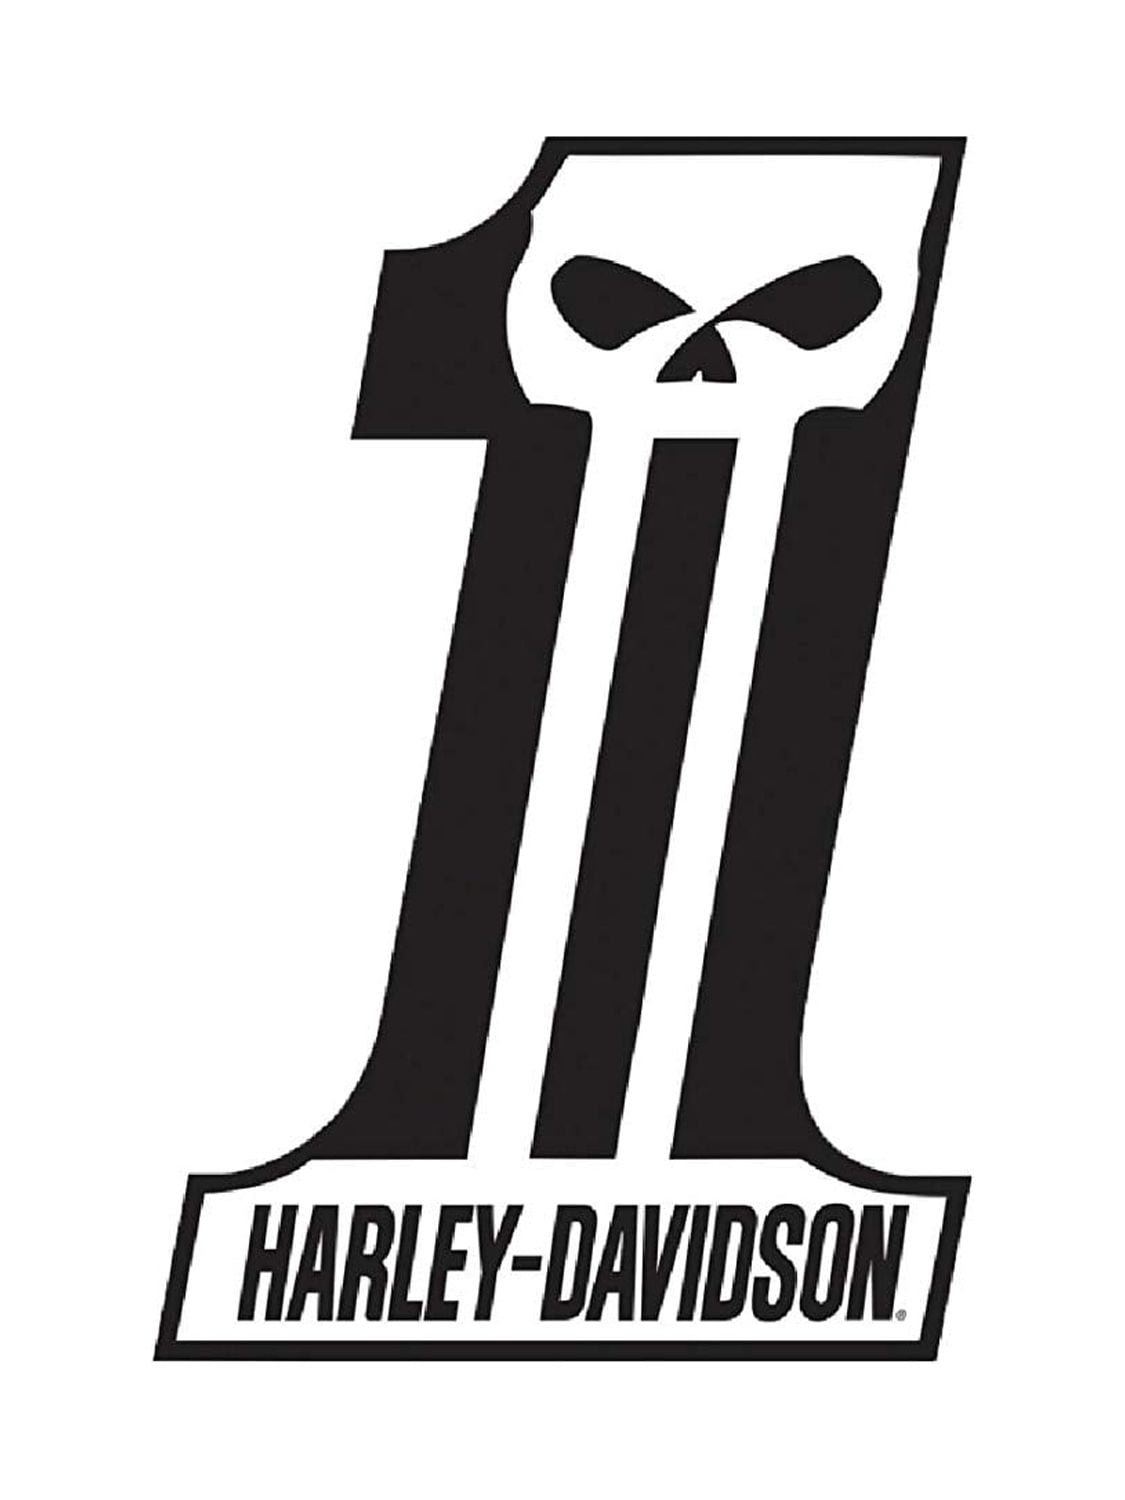 Harley-Davidson® Patriotic Number One (1) Tin Metal Sign 12 x 18 Inch  2010191 - Wisconsin Harley-Davidson